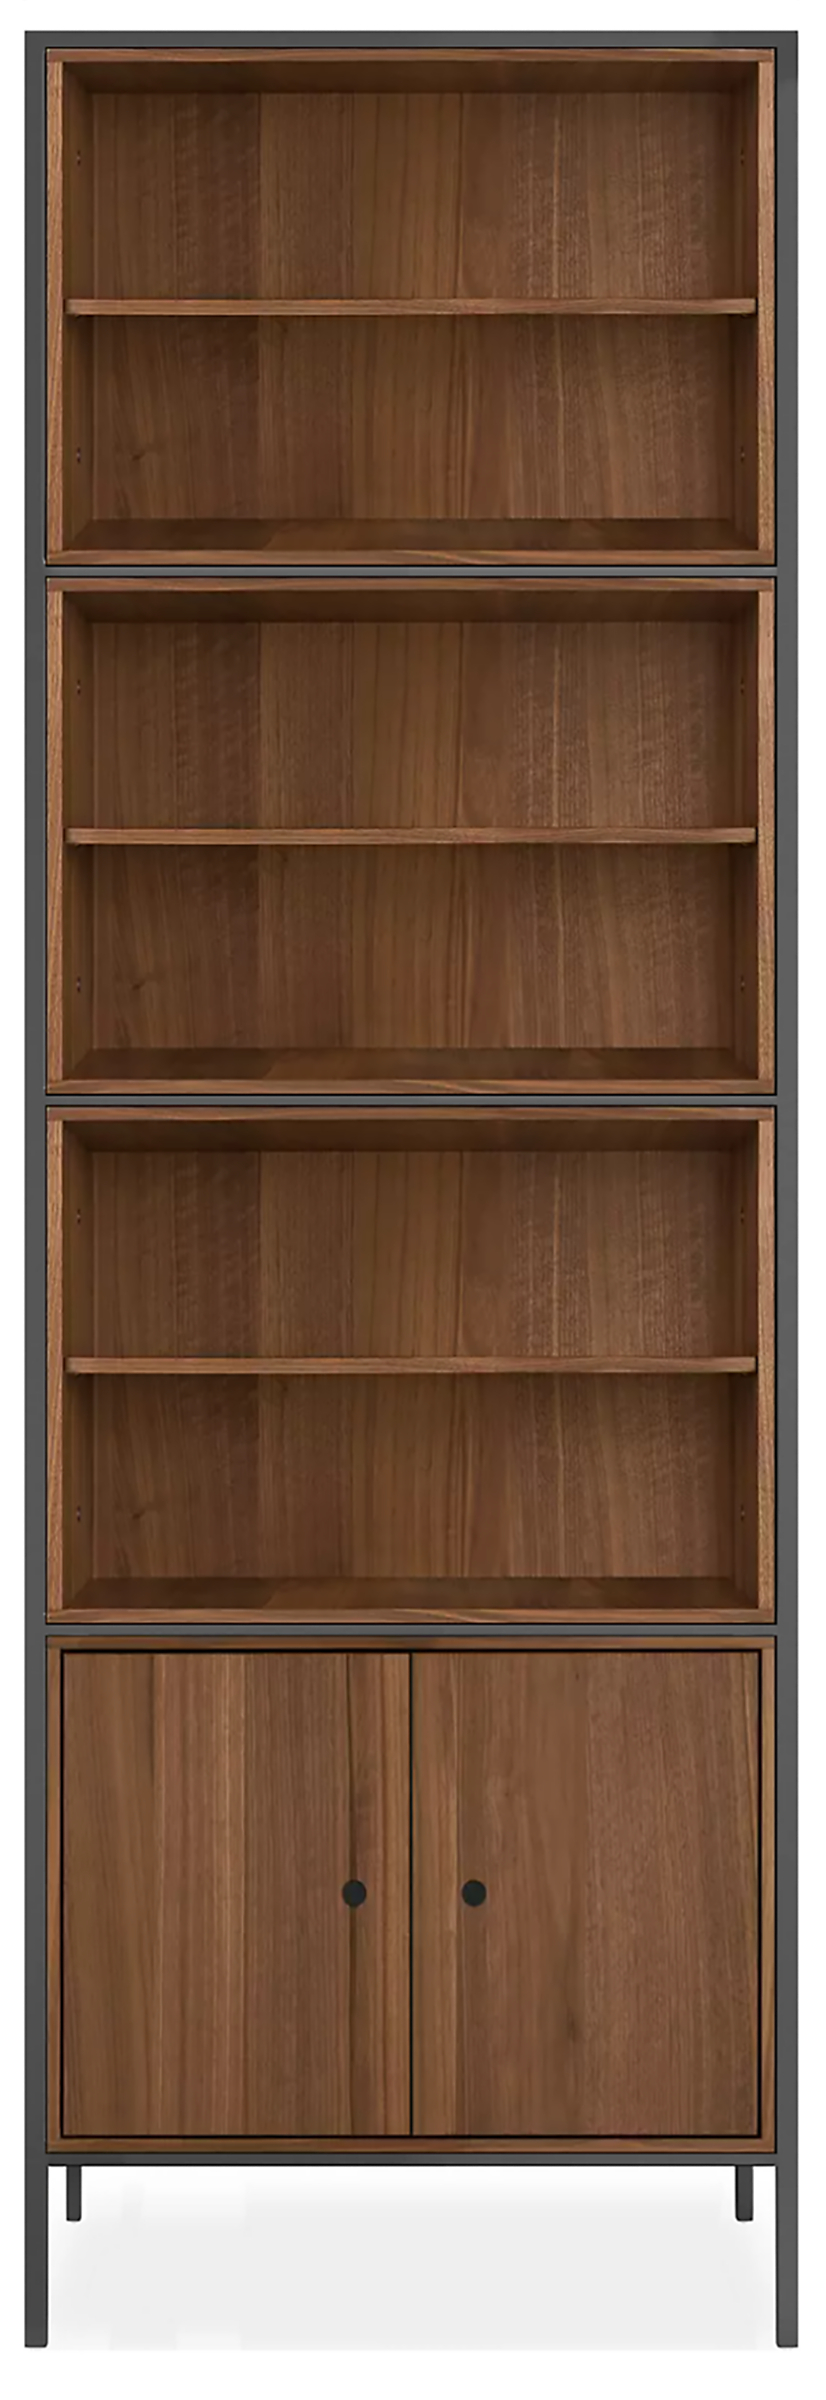 Slim Modular Bookcases & Wall Units